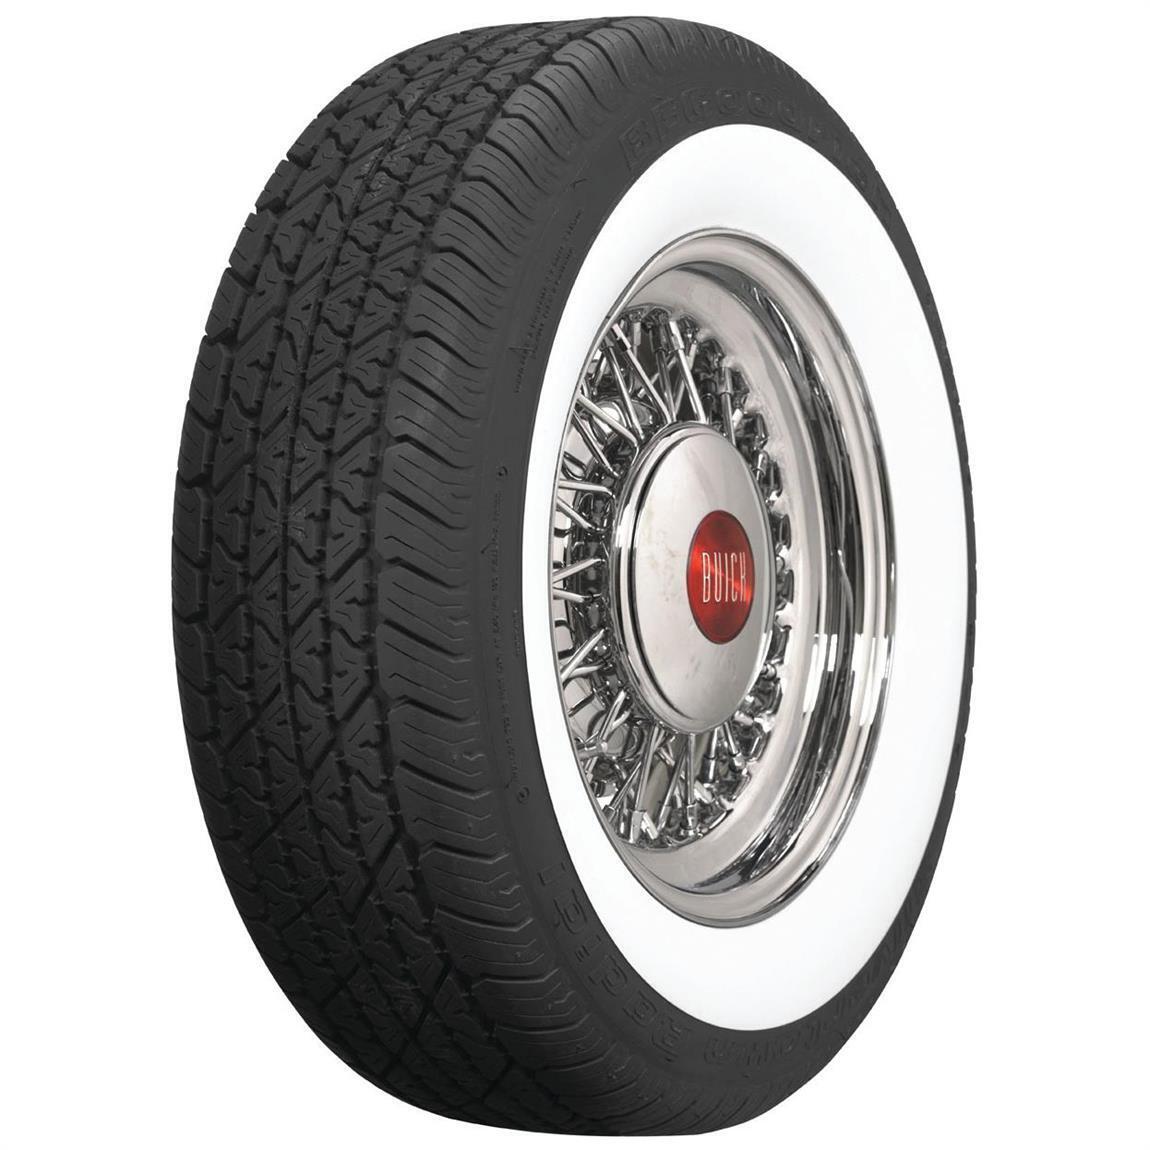 BF Goodrich 579403 Silvertown Whitewall Radial Tire, 205/75R15